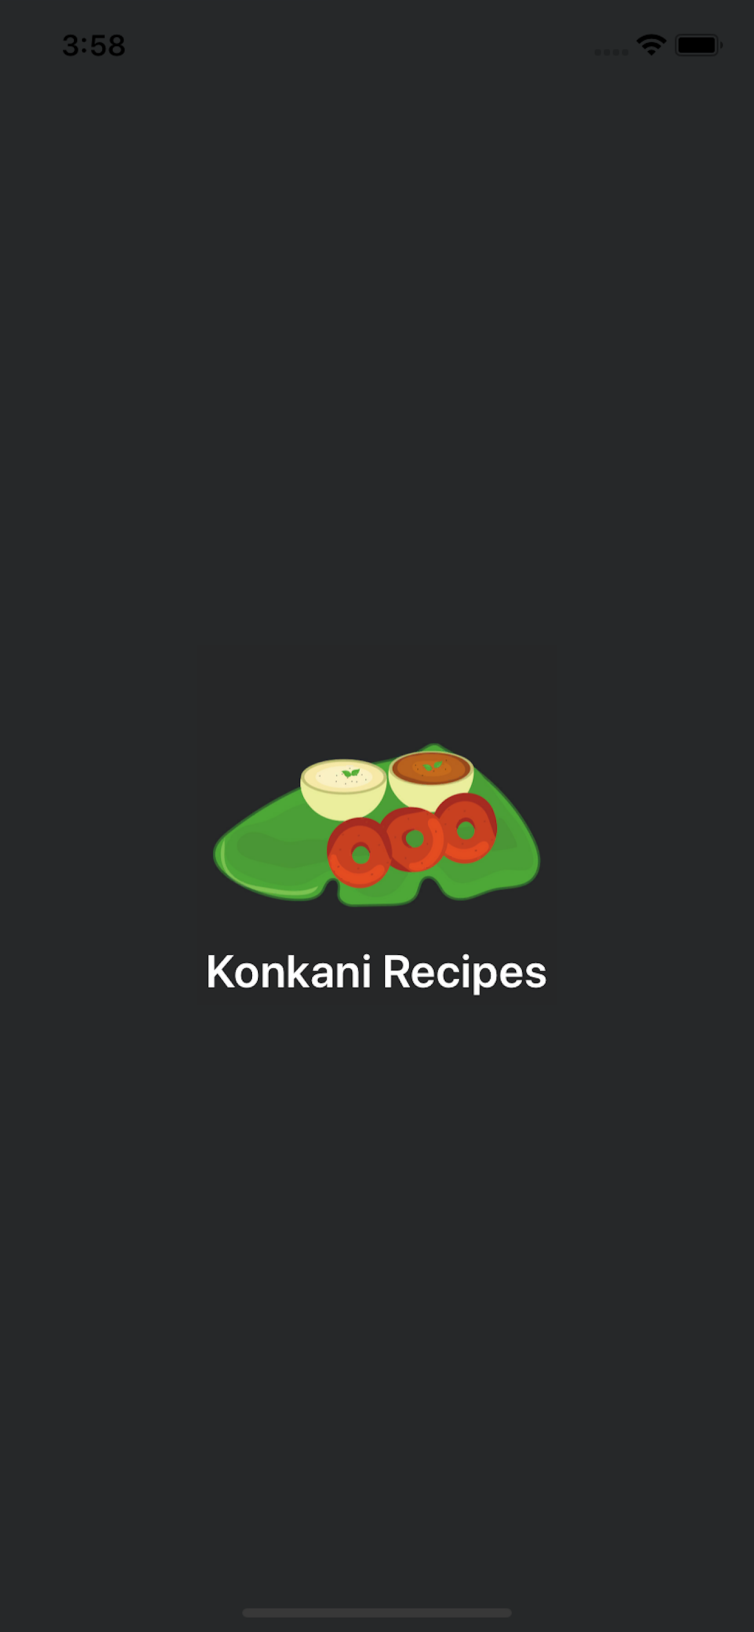 Konkani Recipes Application